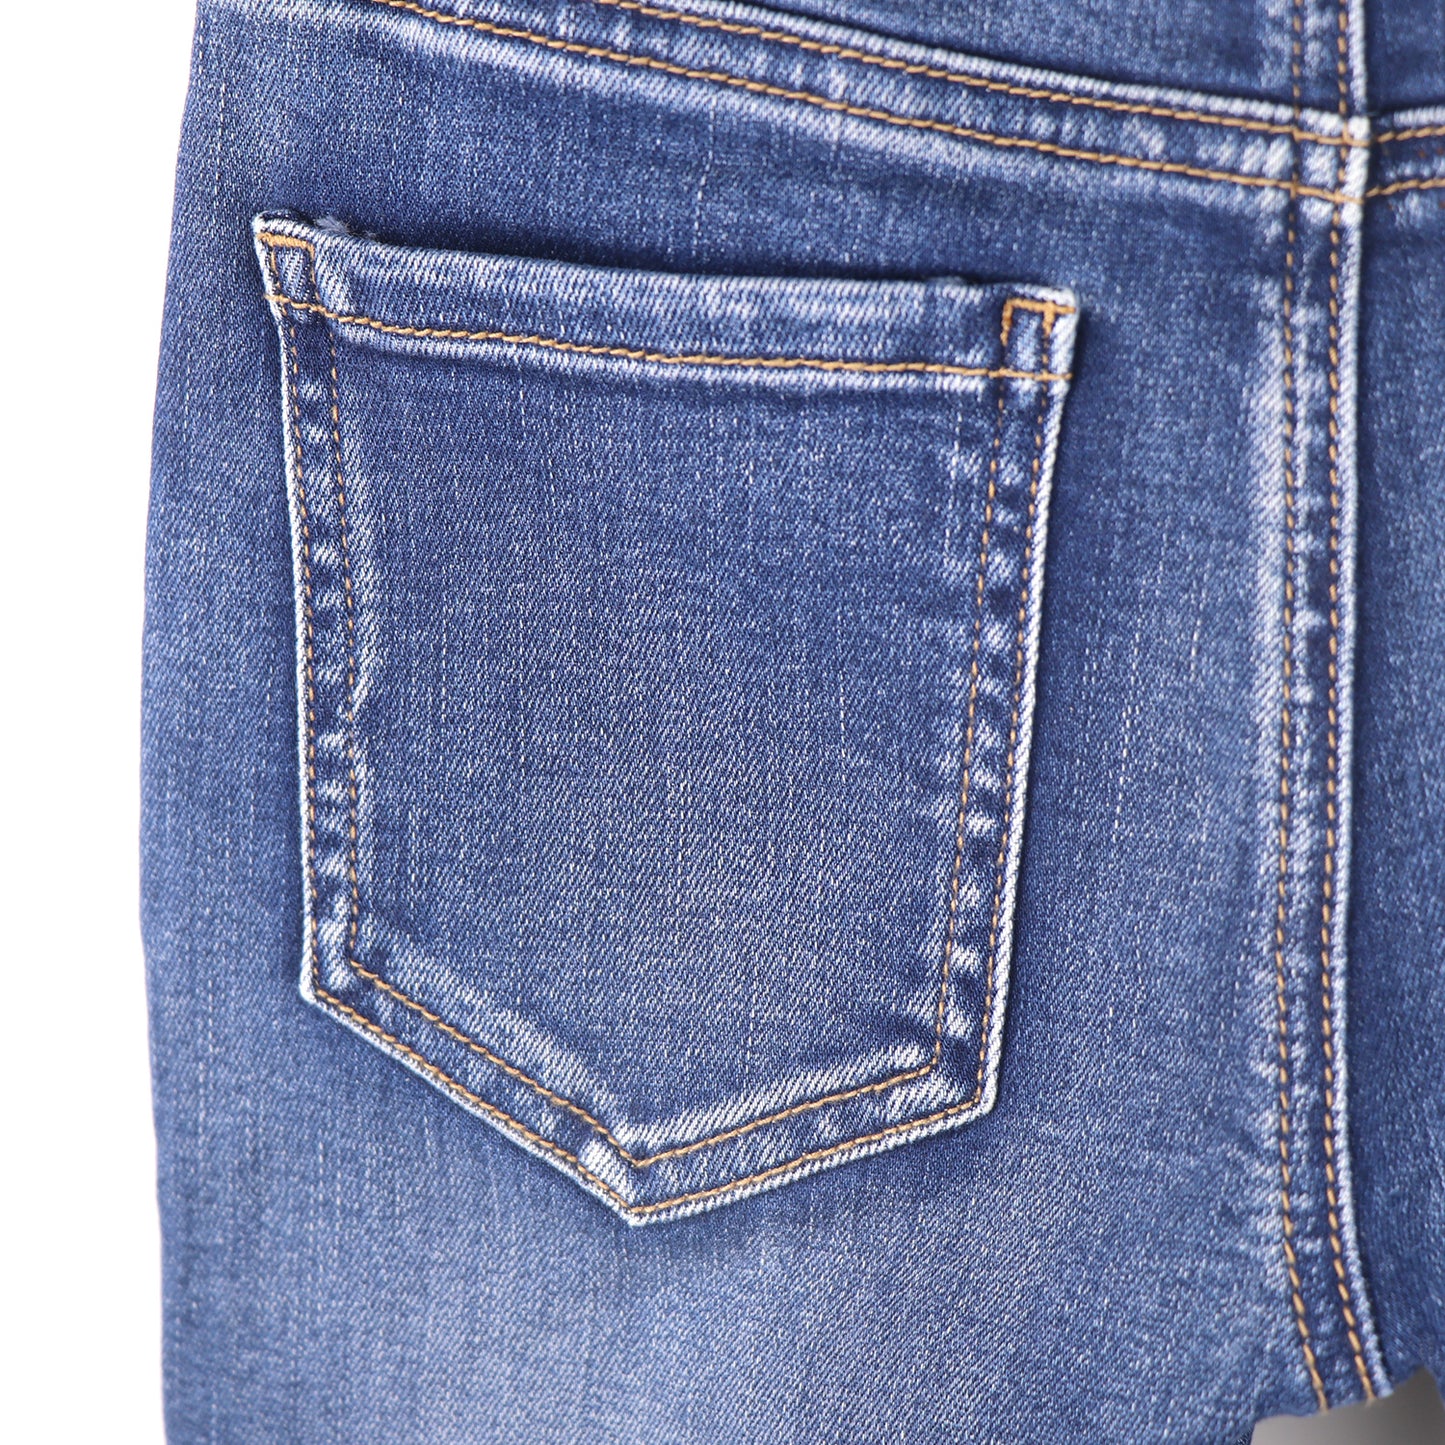 Little Boys  Jeans, 5-14T Elastic Waistband Inside High Stretchy Denim Pants